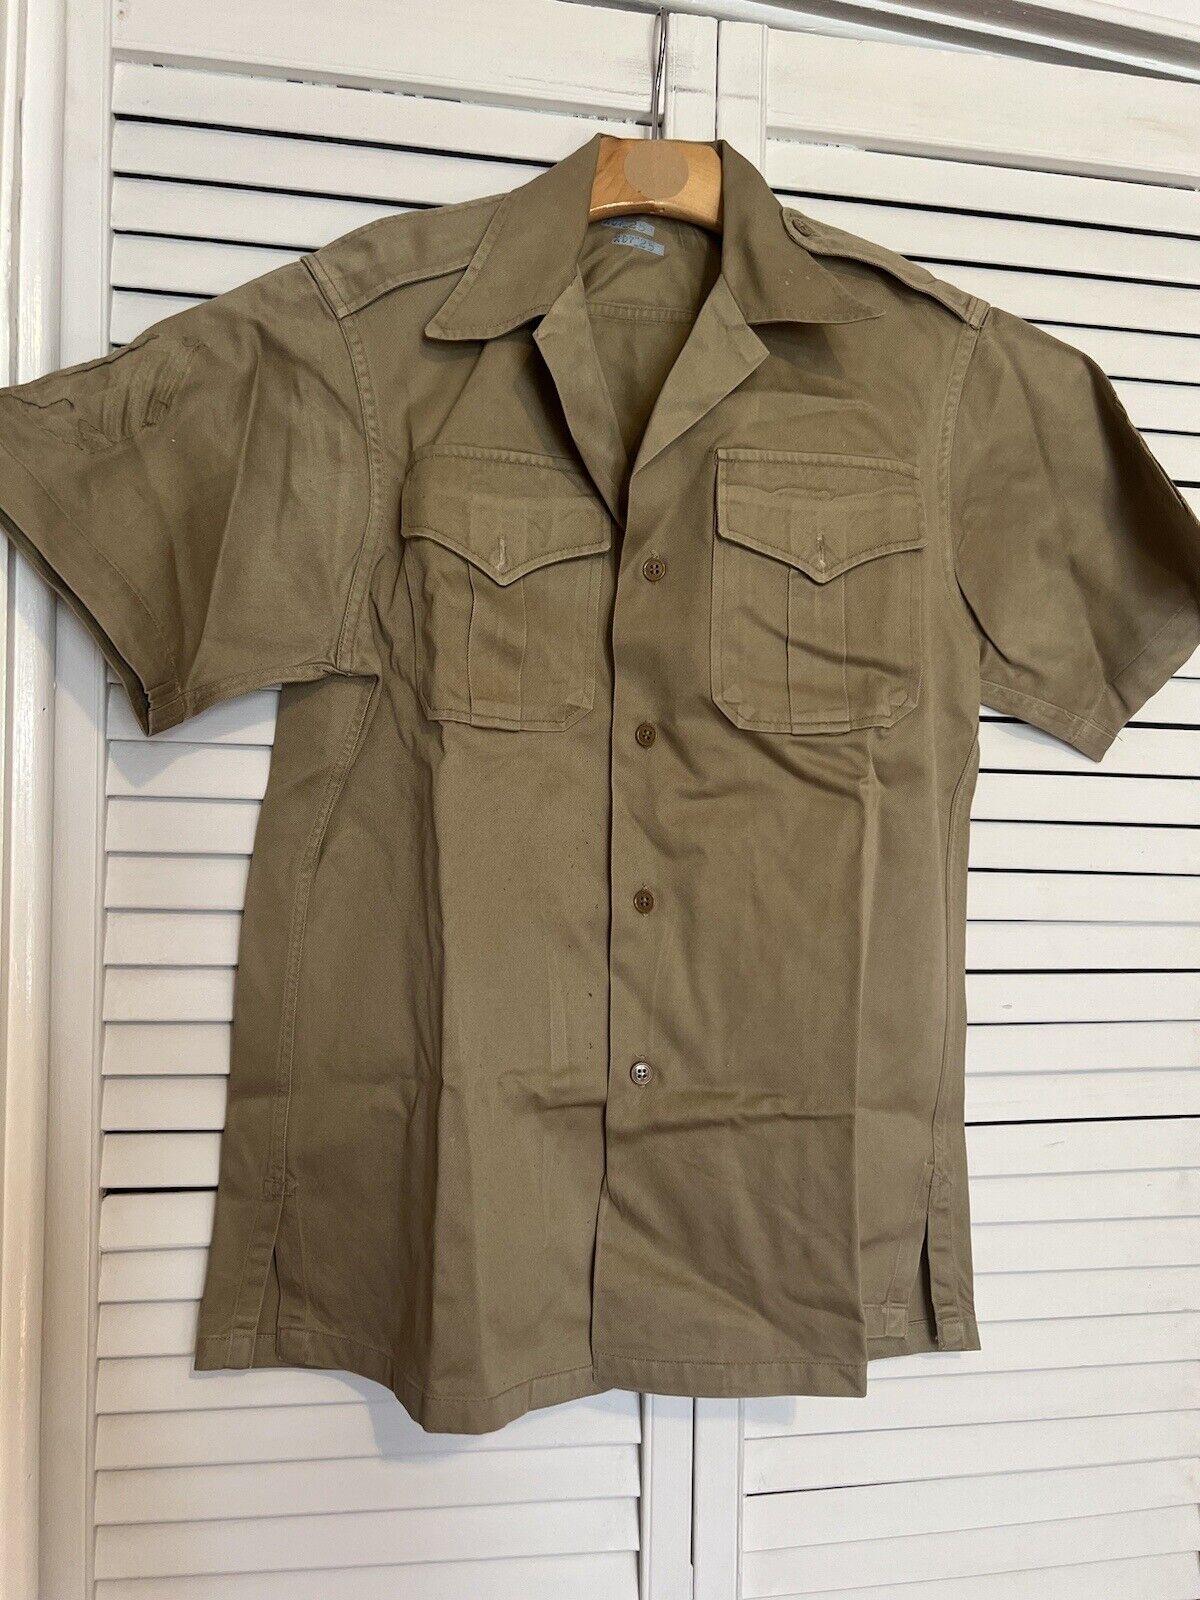 ARMY Vintage Men\'s Size Small Shirt Tan 60s Vietnam War Short Sleeve Khaki Color